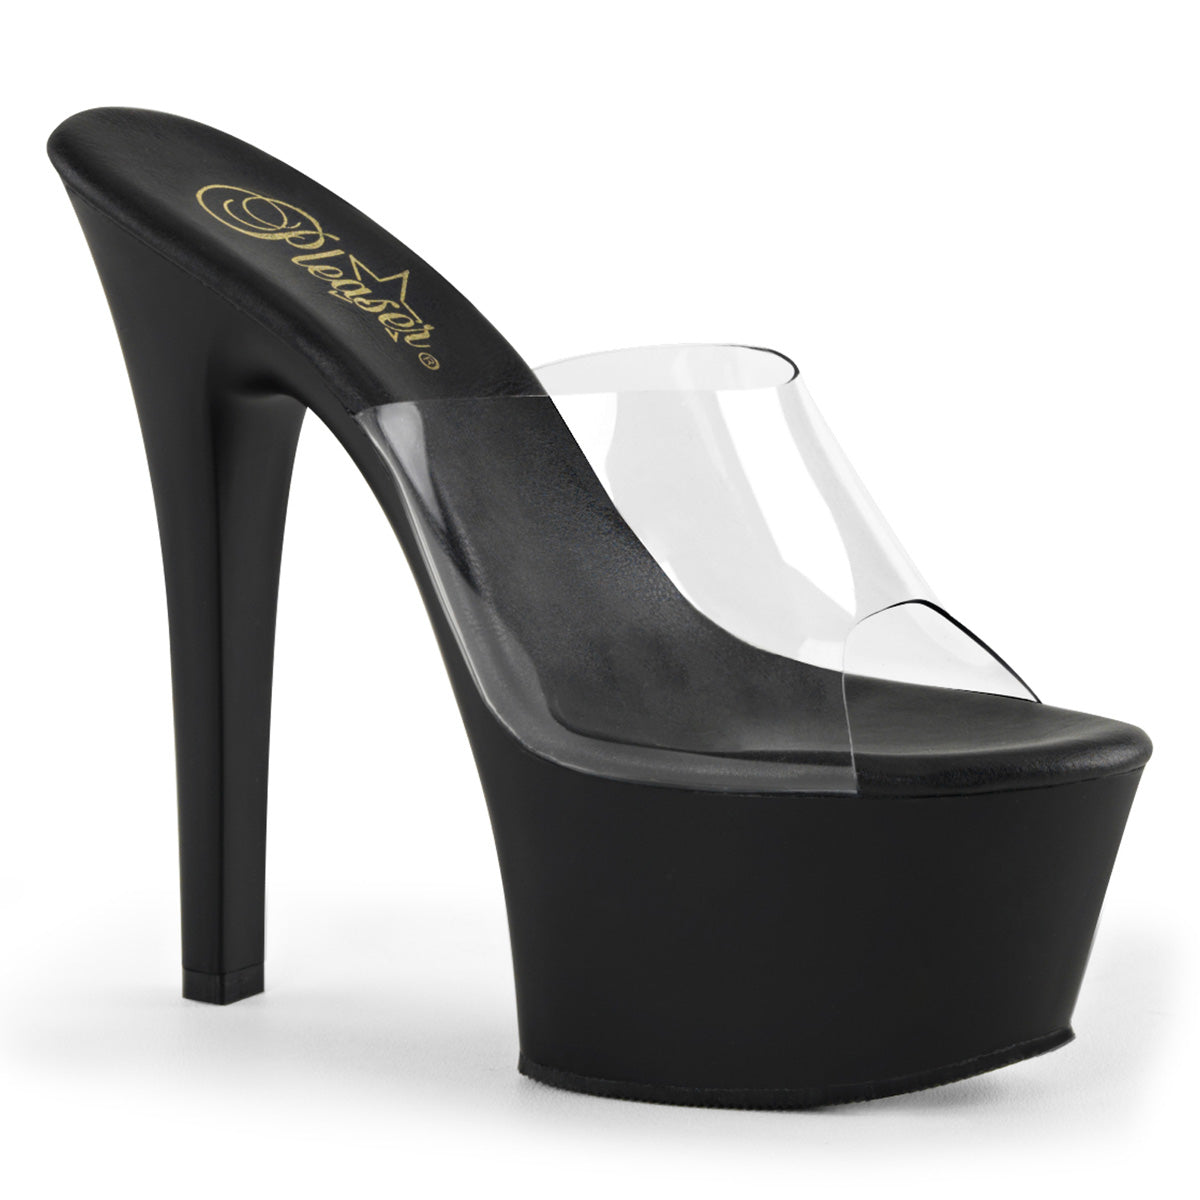 Buy KLAUR MELBOURNE Women 6 Inch High Heel Sandals Black at Amazon.in